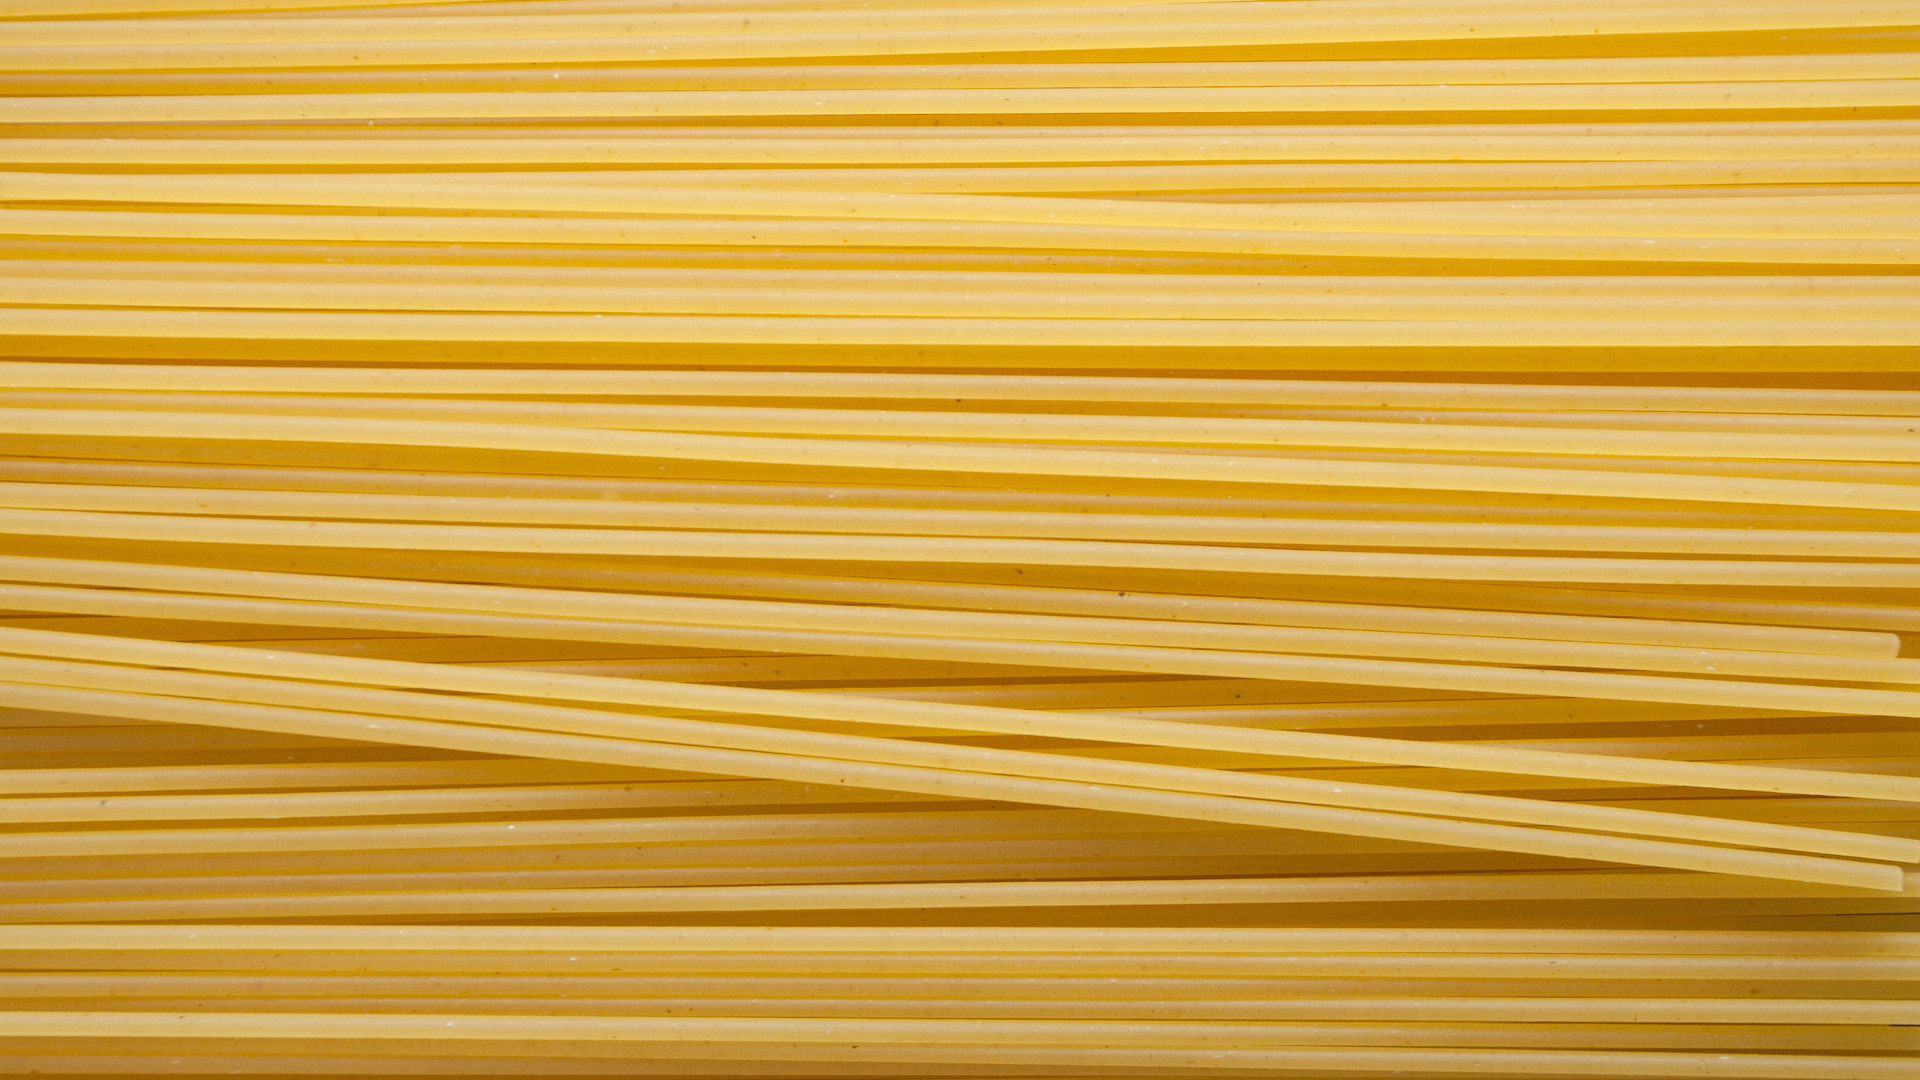 Strands of uncooked spaghetti